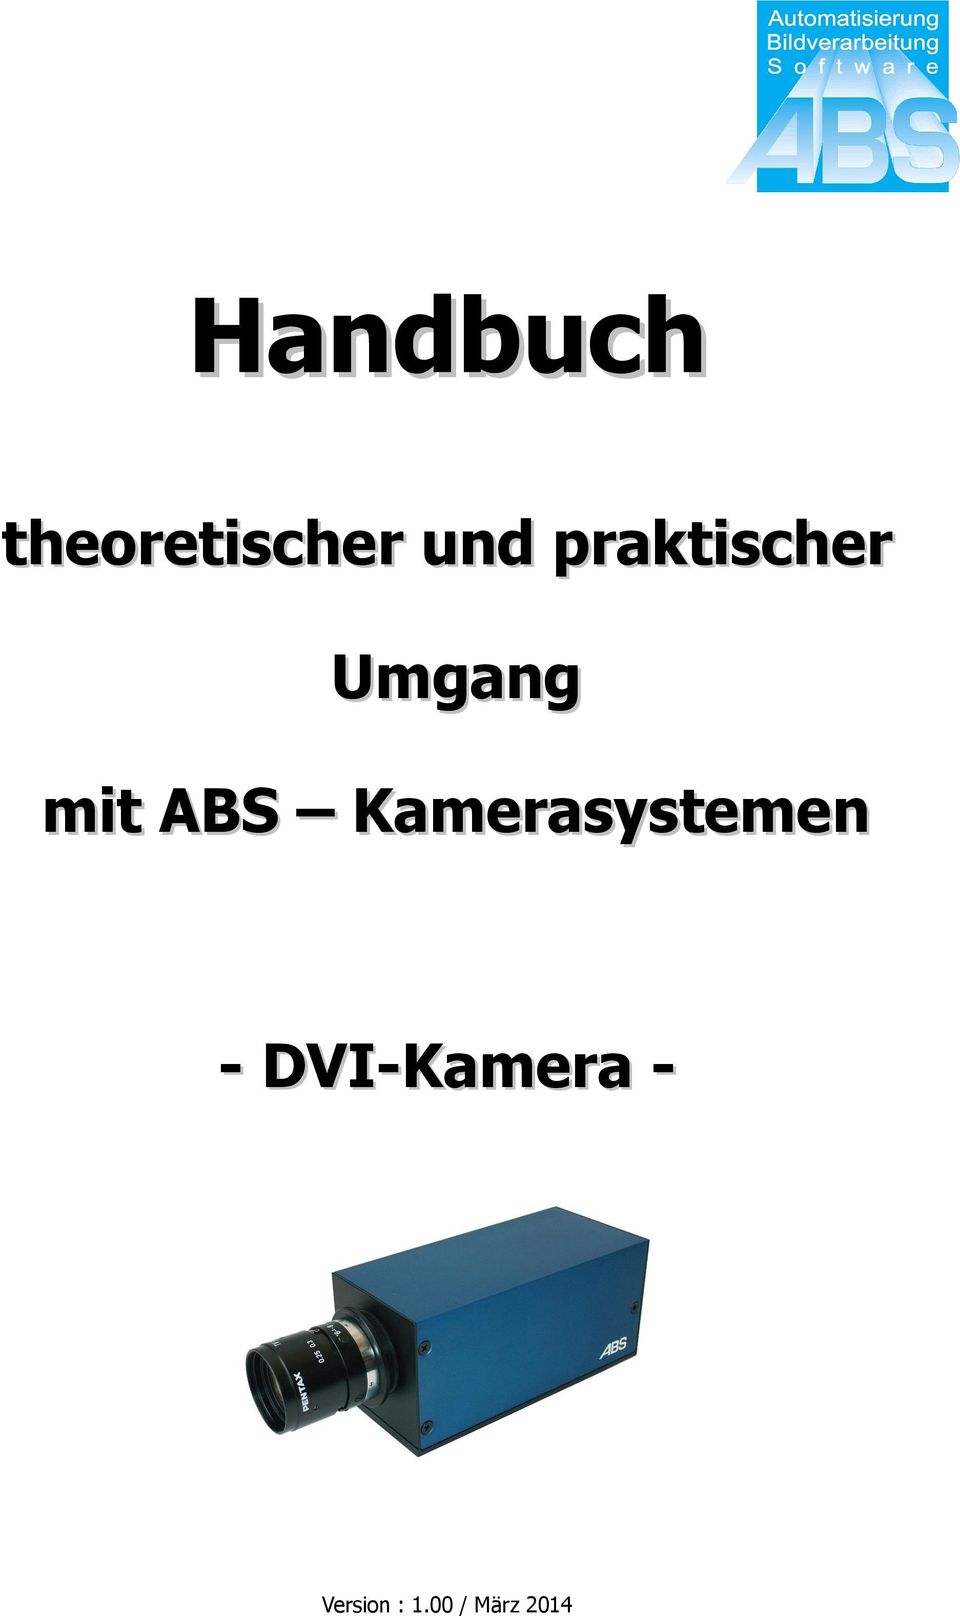 Kamerasystemen - DVI-Kamera